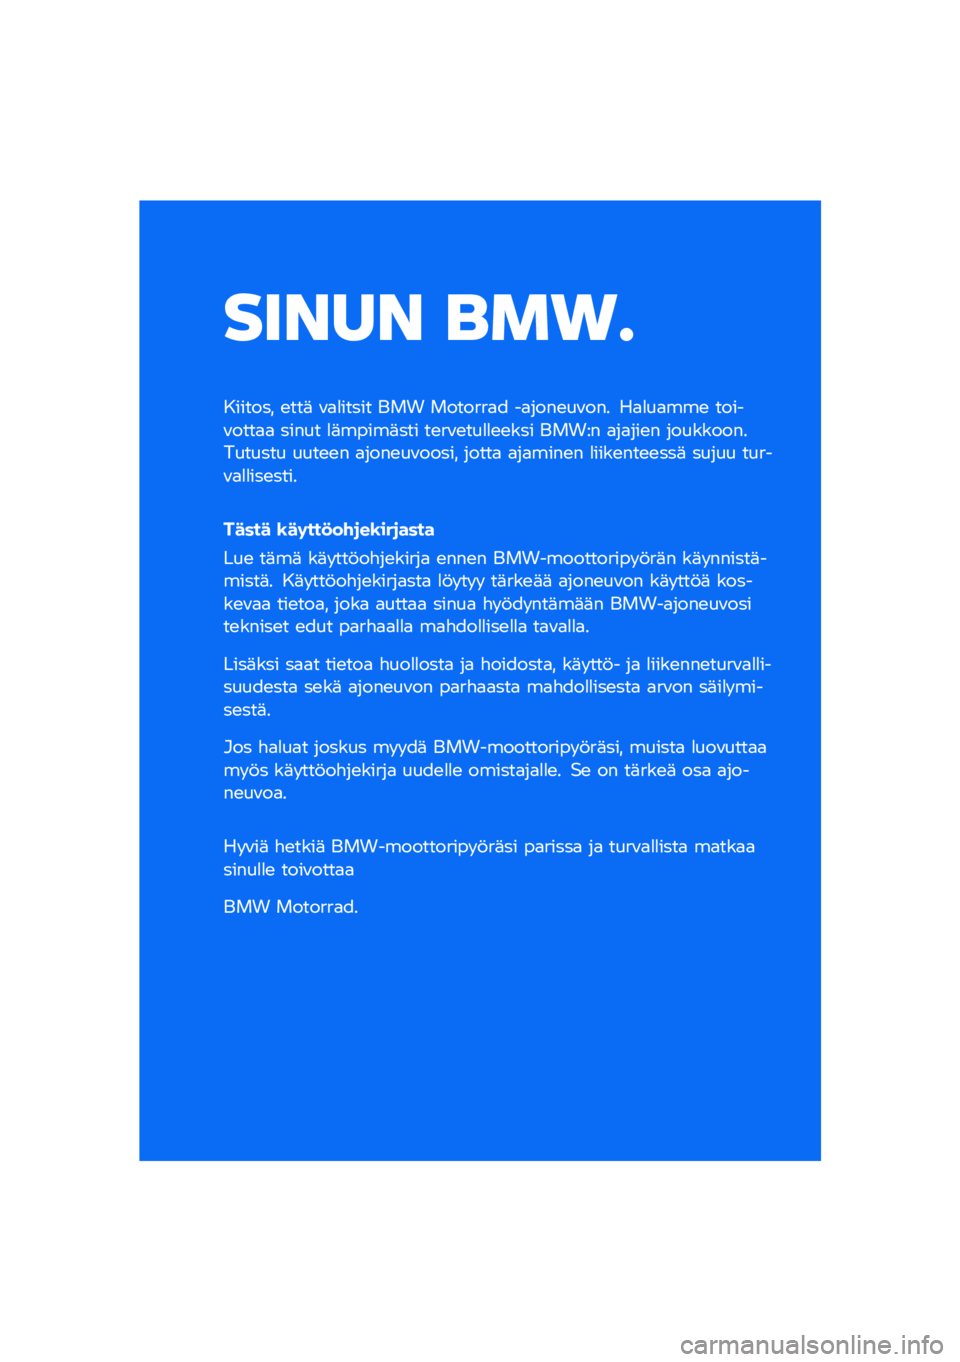 BMW MOTORRAD R NINE T SCRAMBLER 2021  Käsikirja (in Finnish) ����� ���\b�	
������� �\b���	 �\f�
�
����� ��� �������
� ��
����\b��\f��� ��
�
��
���\b �����\f����
�
 ����� �
�	�����	��� ��\b��\f�\b�